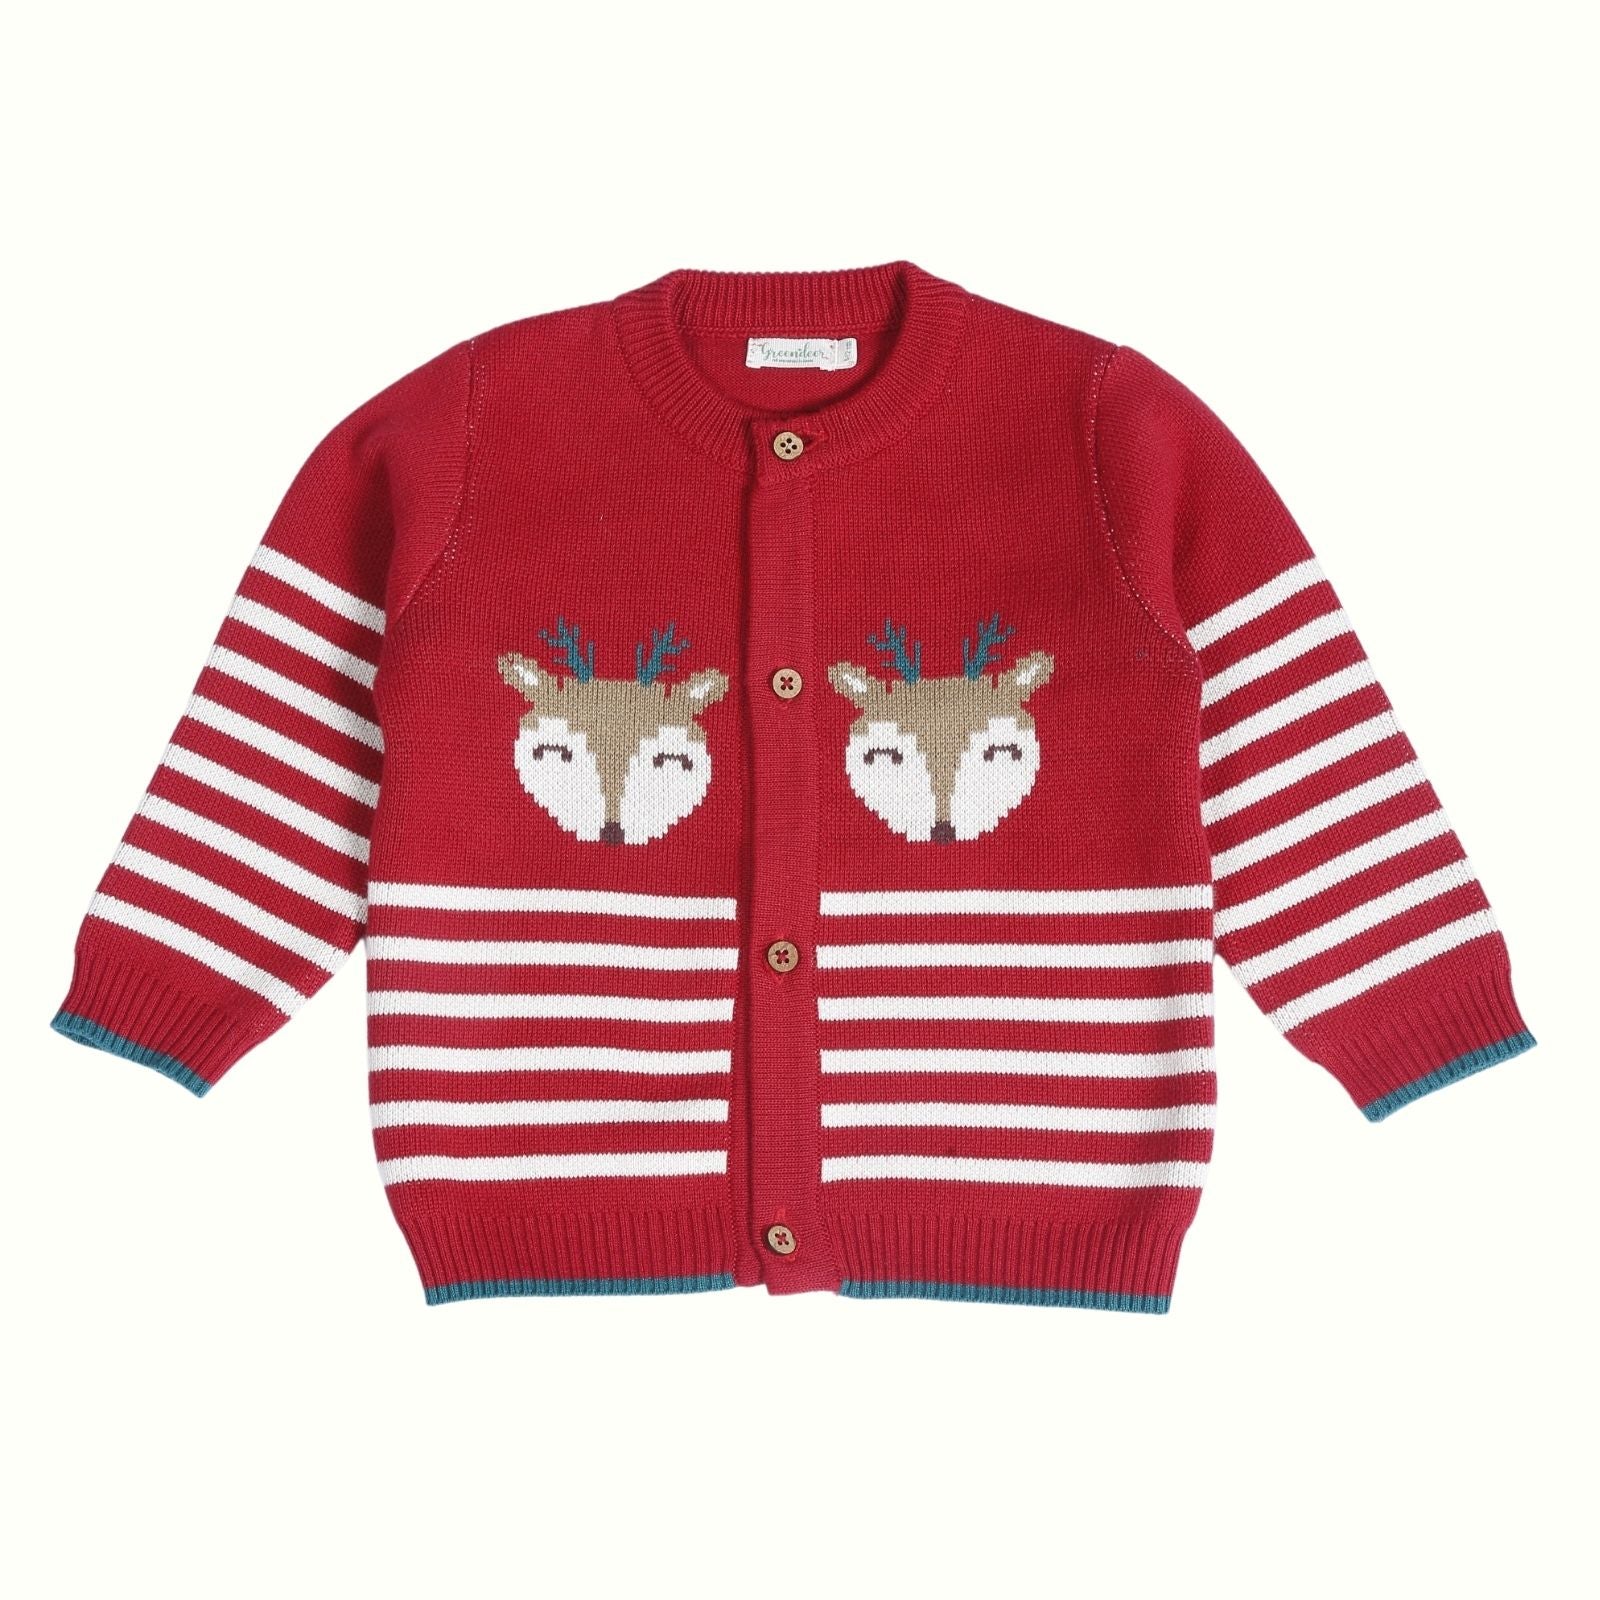 Greendeer Jaunty Reindeer, Joyful Reindeer & Hearth Warming Bear 100% Cotton Sweater with Red Lower Set of 4